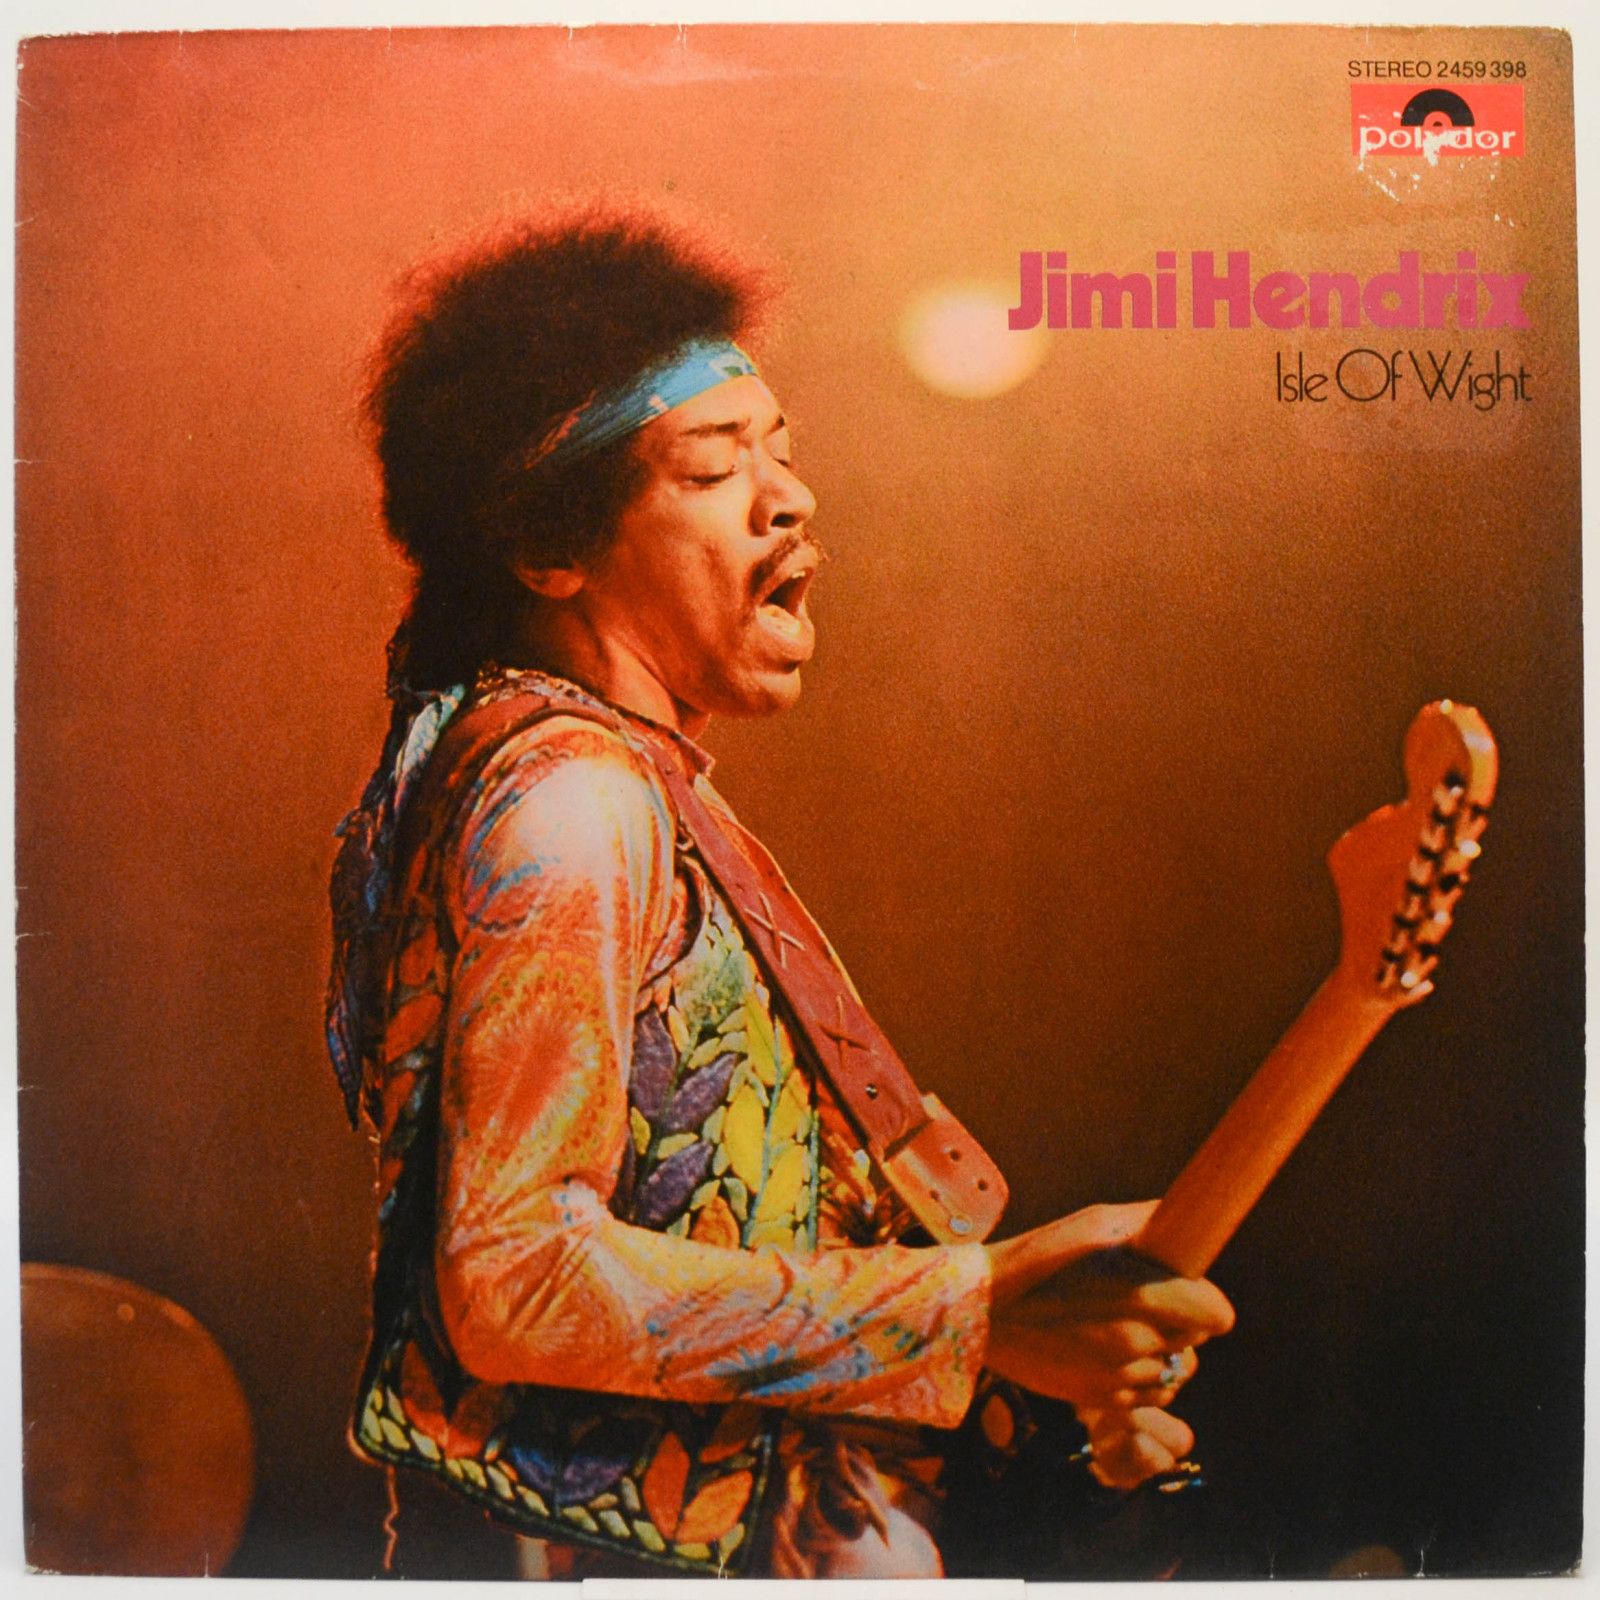 Jimi Hendrix — Isle Of Wight, 1971